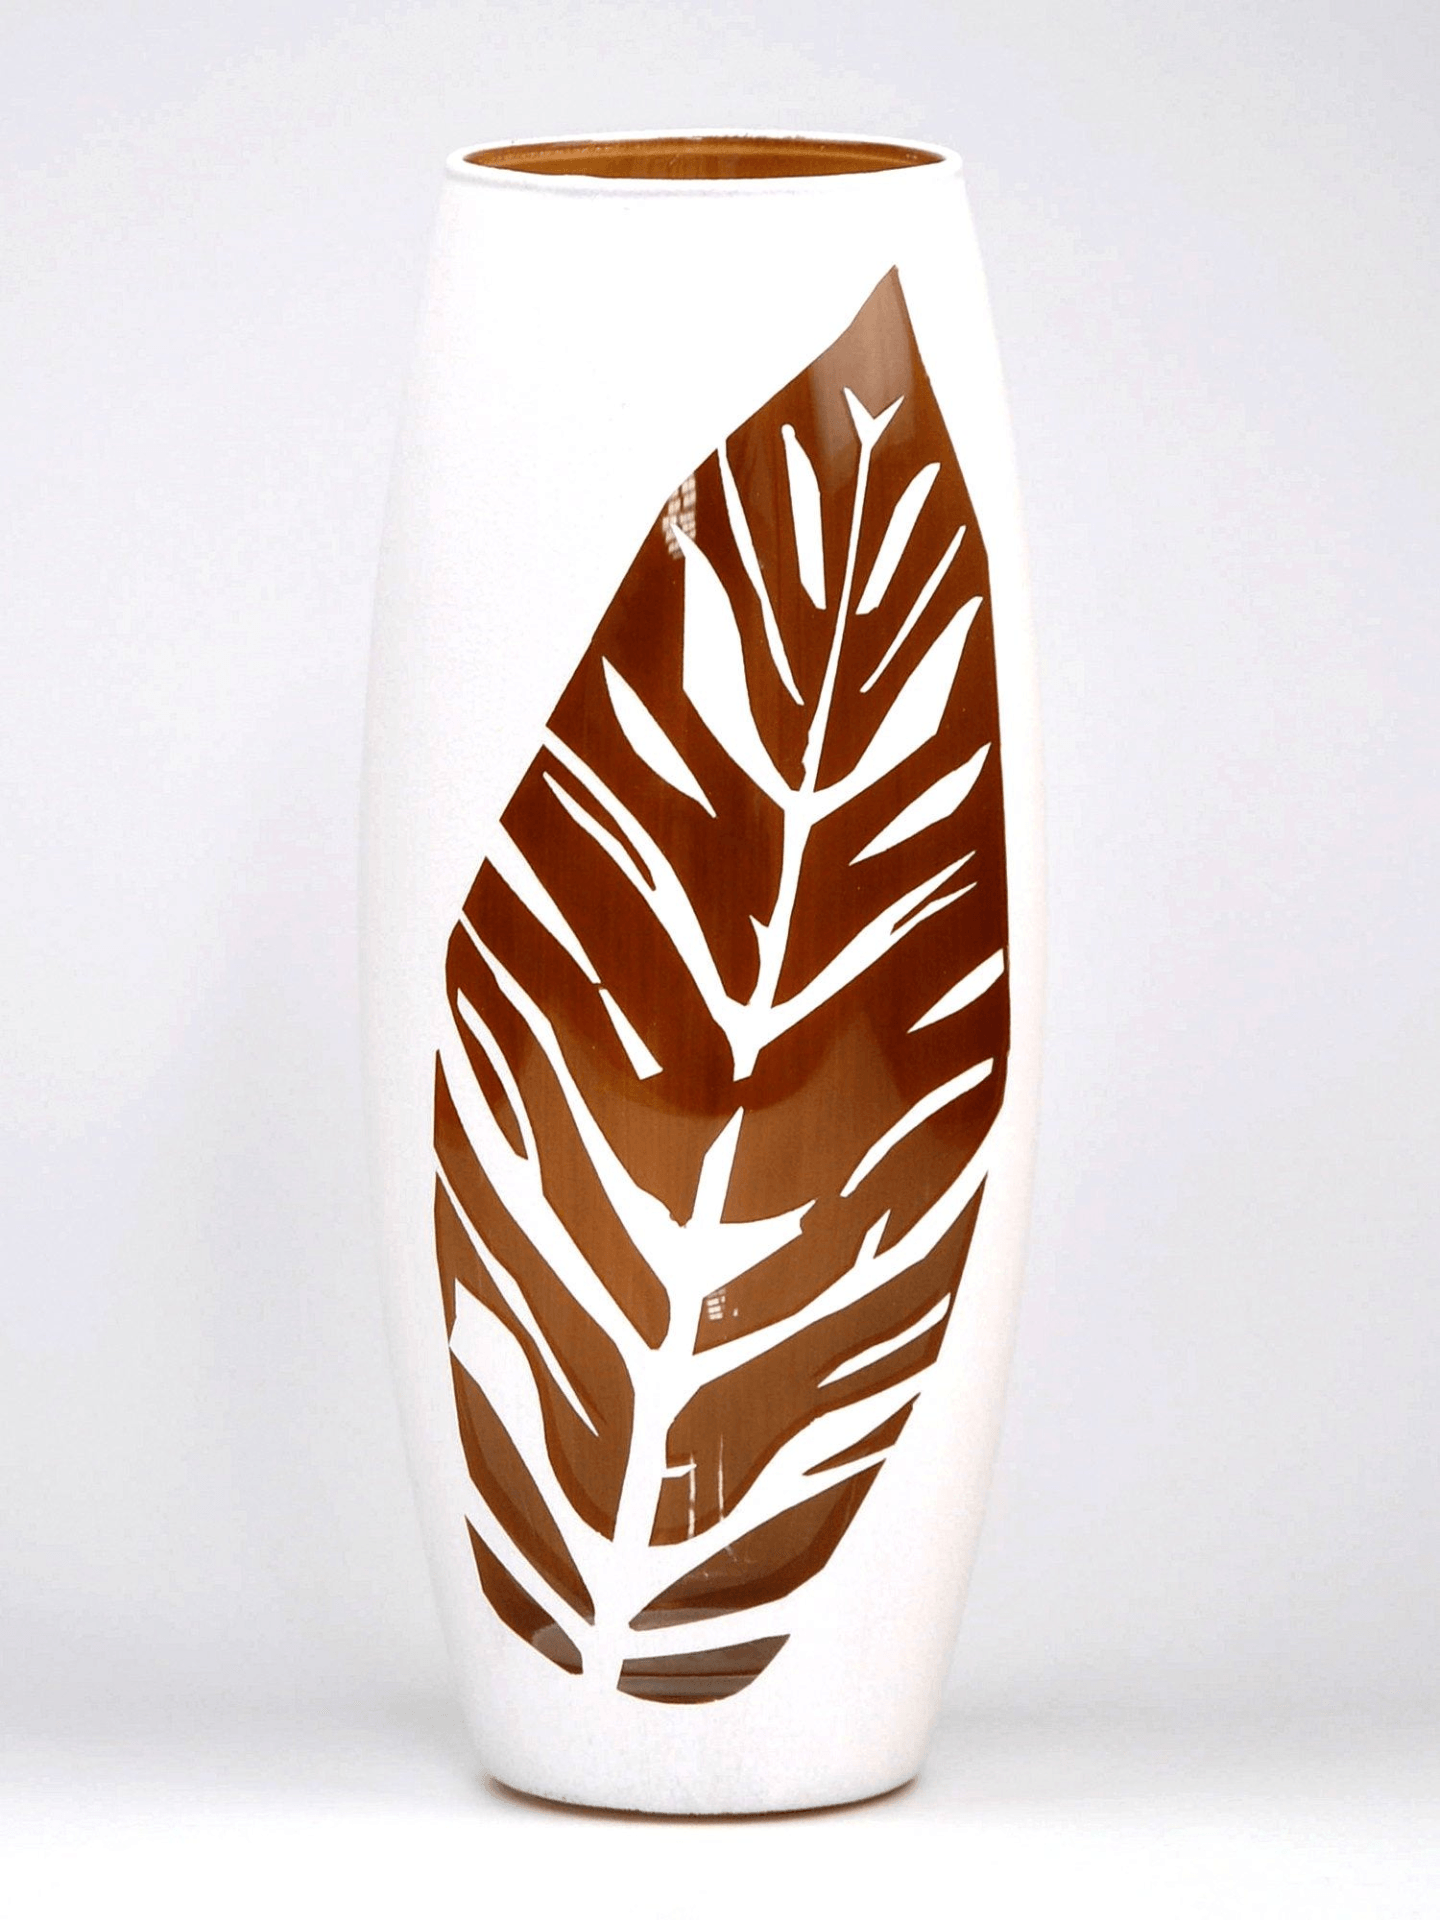 White Painted Art Glass Oval Vase for Flowers | Interior Design | Home Decor | Table vase 10 inch | 7736/250/sh115  